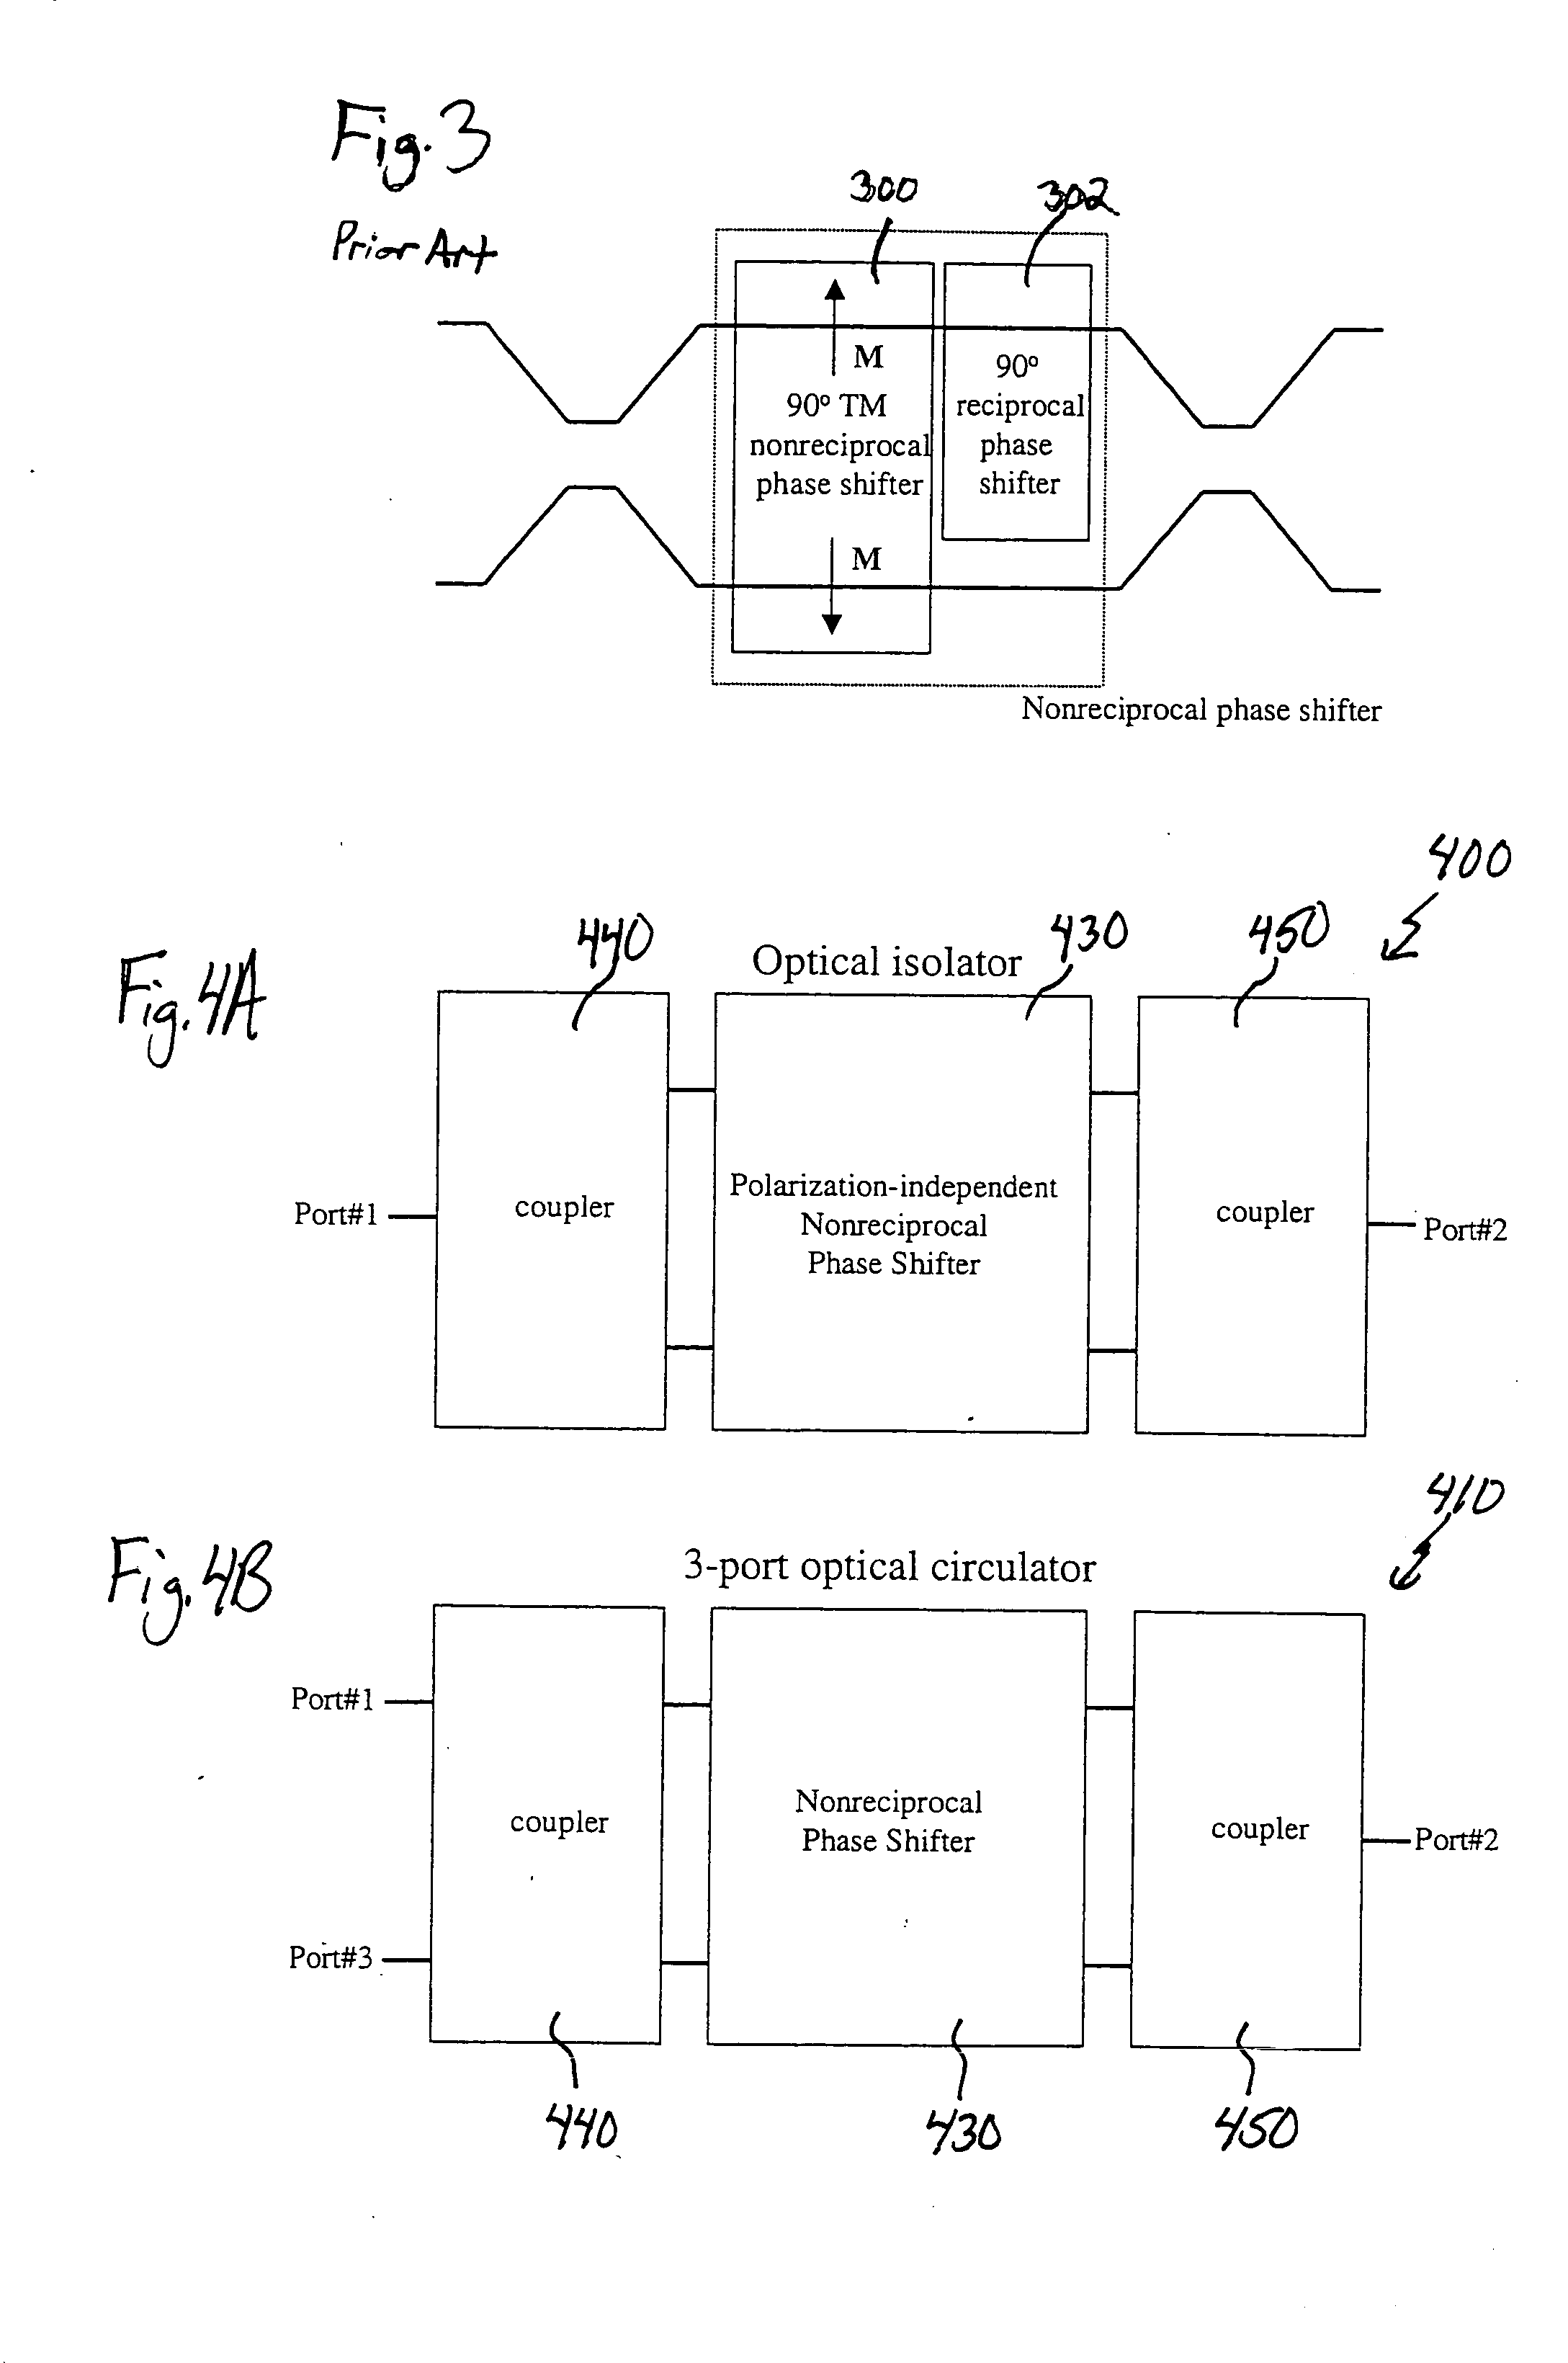 Polarization independent waveguide optical isolator and circulator